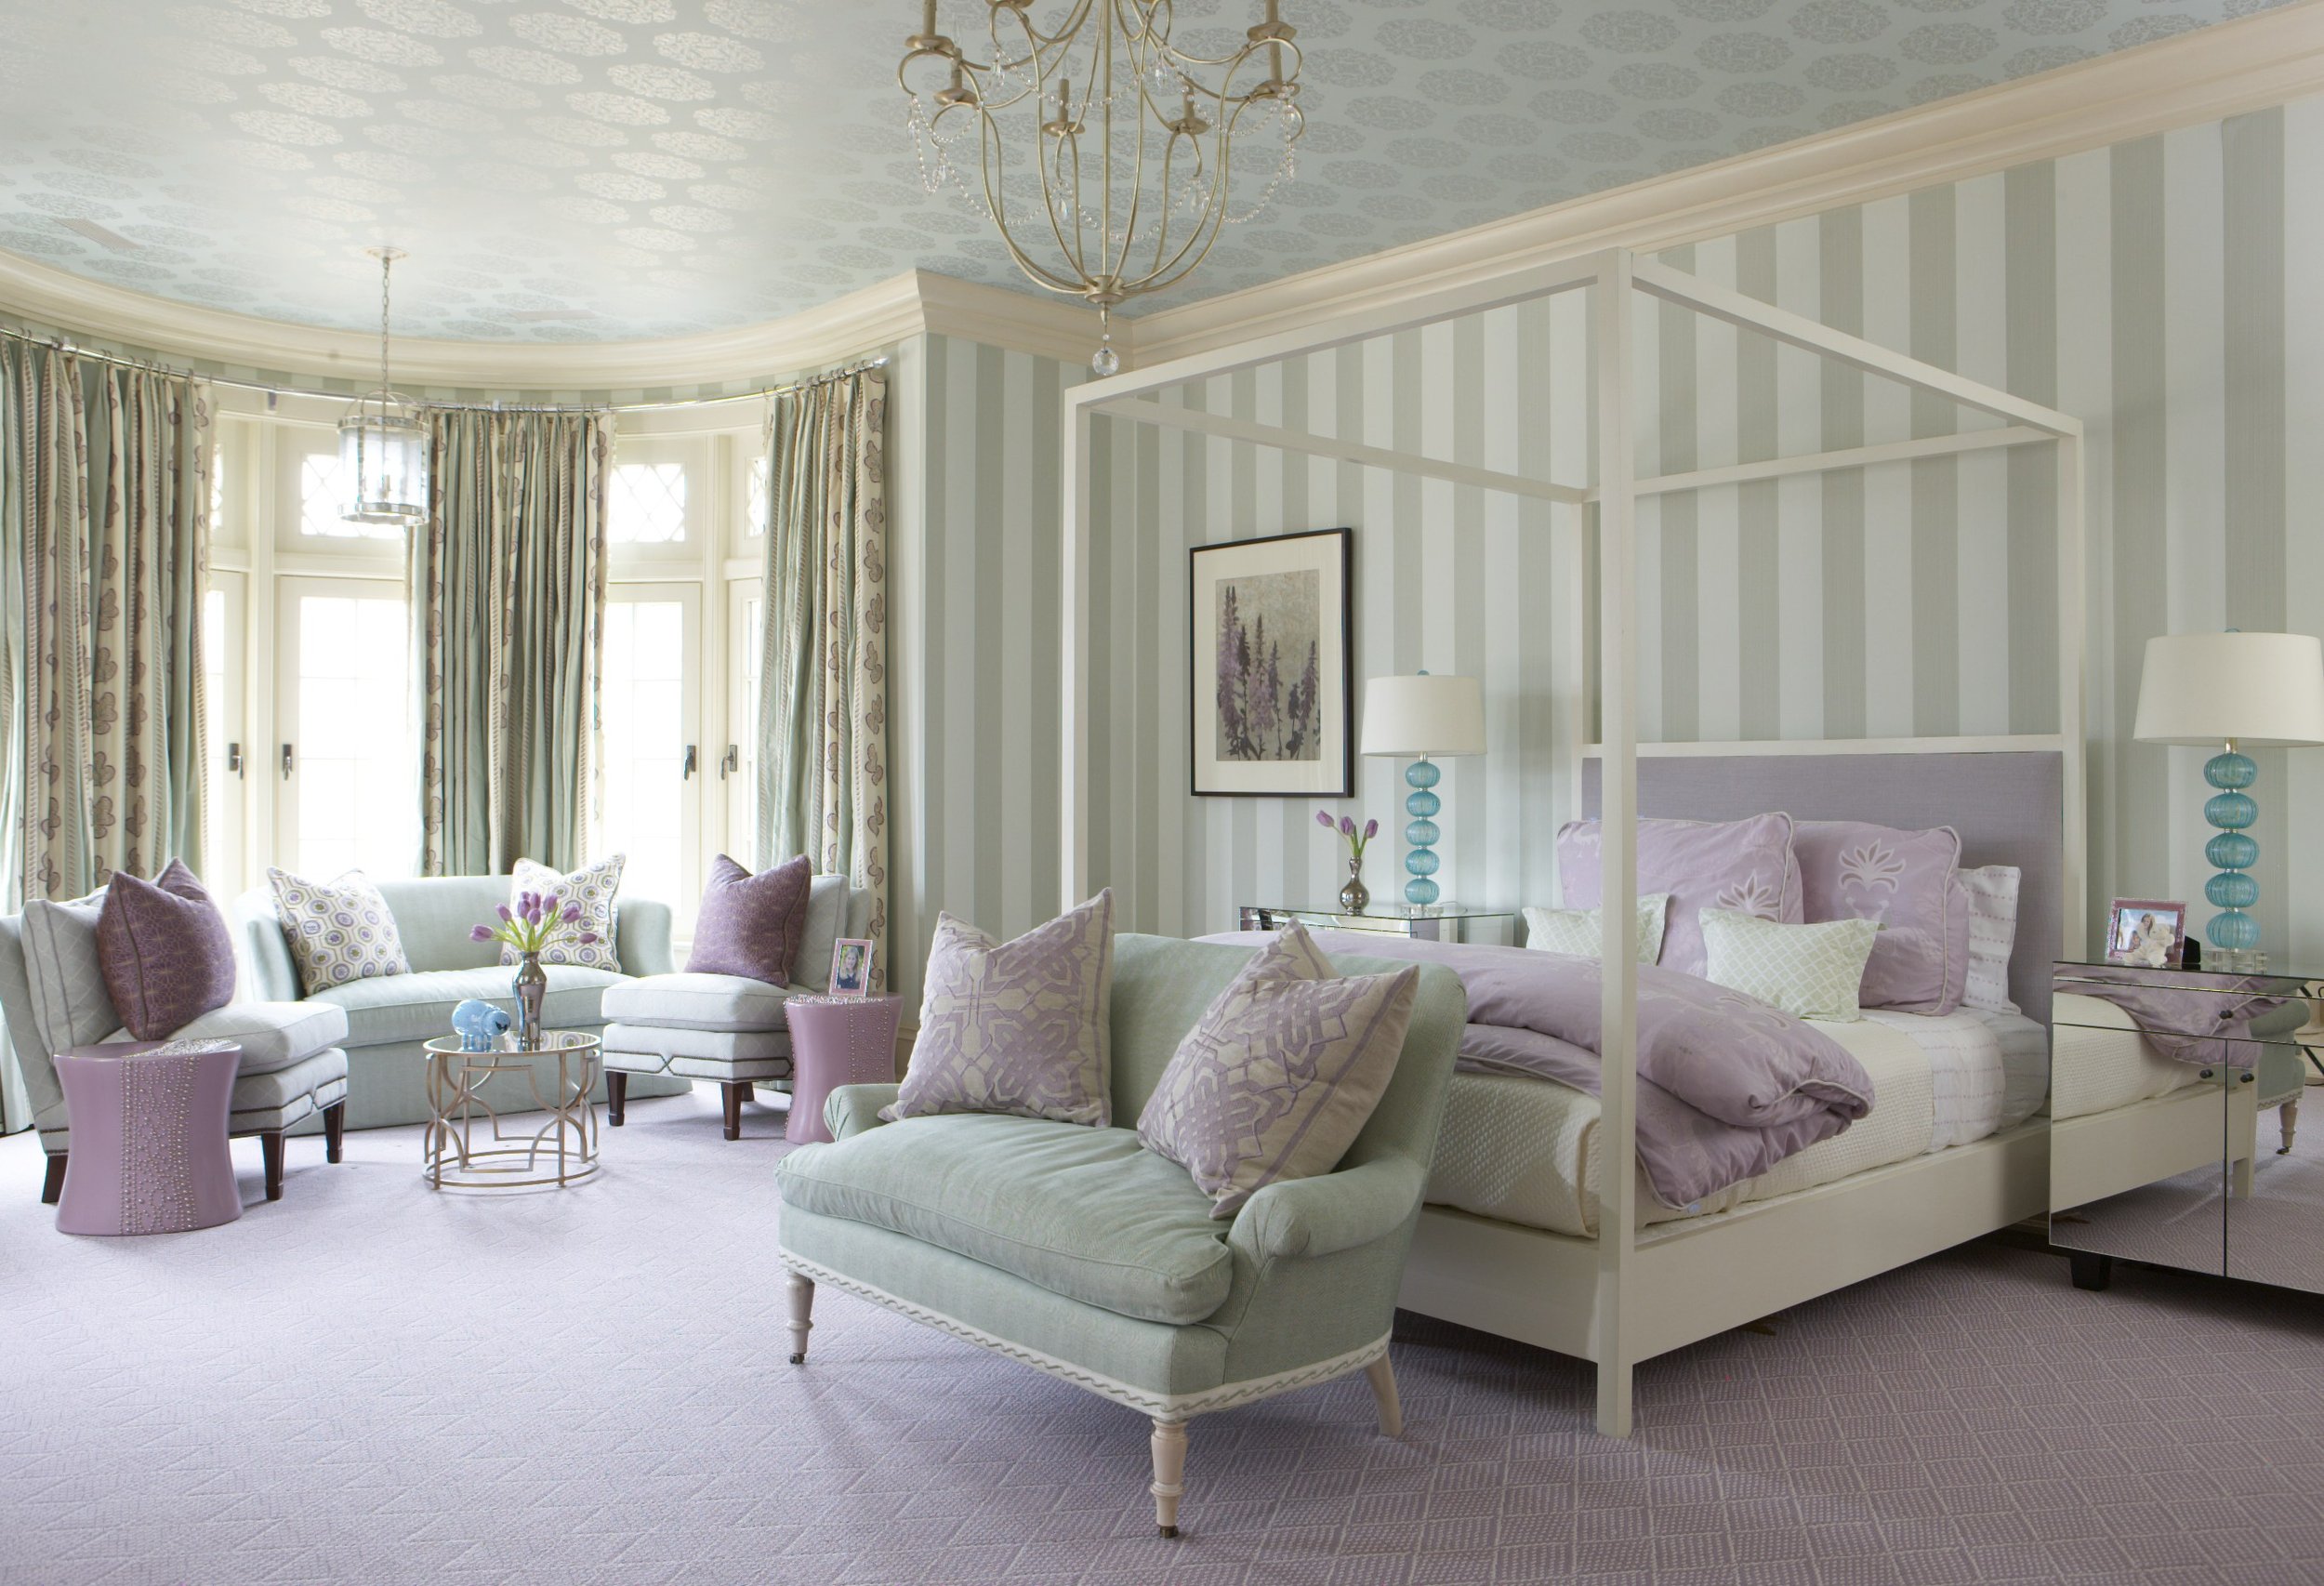 28-purple-blue-accented-bedroom-striped-walls-effortless-rinfret-interior-designs.jpg